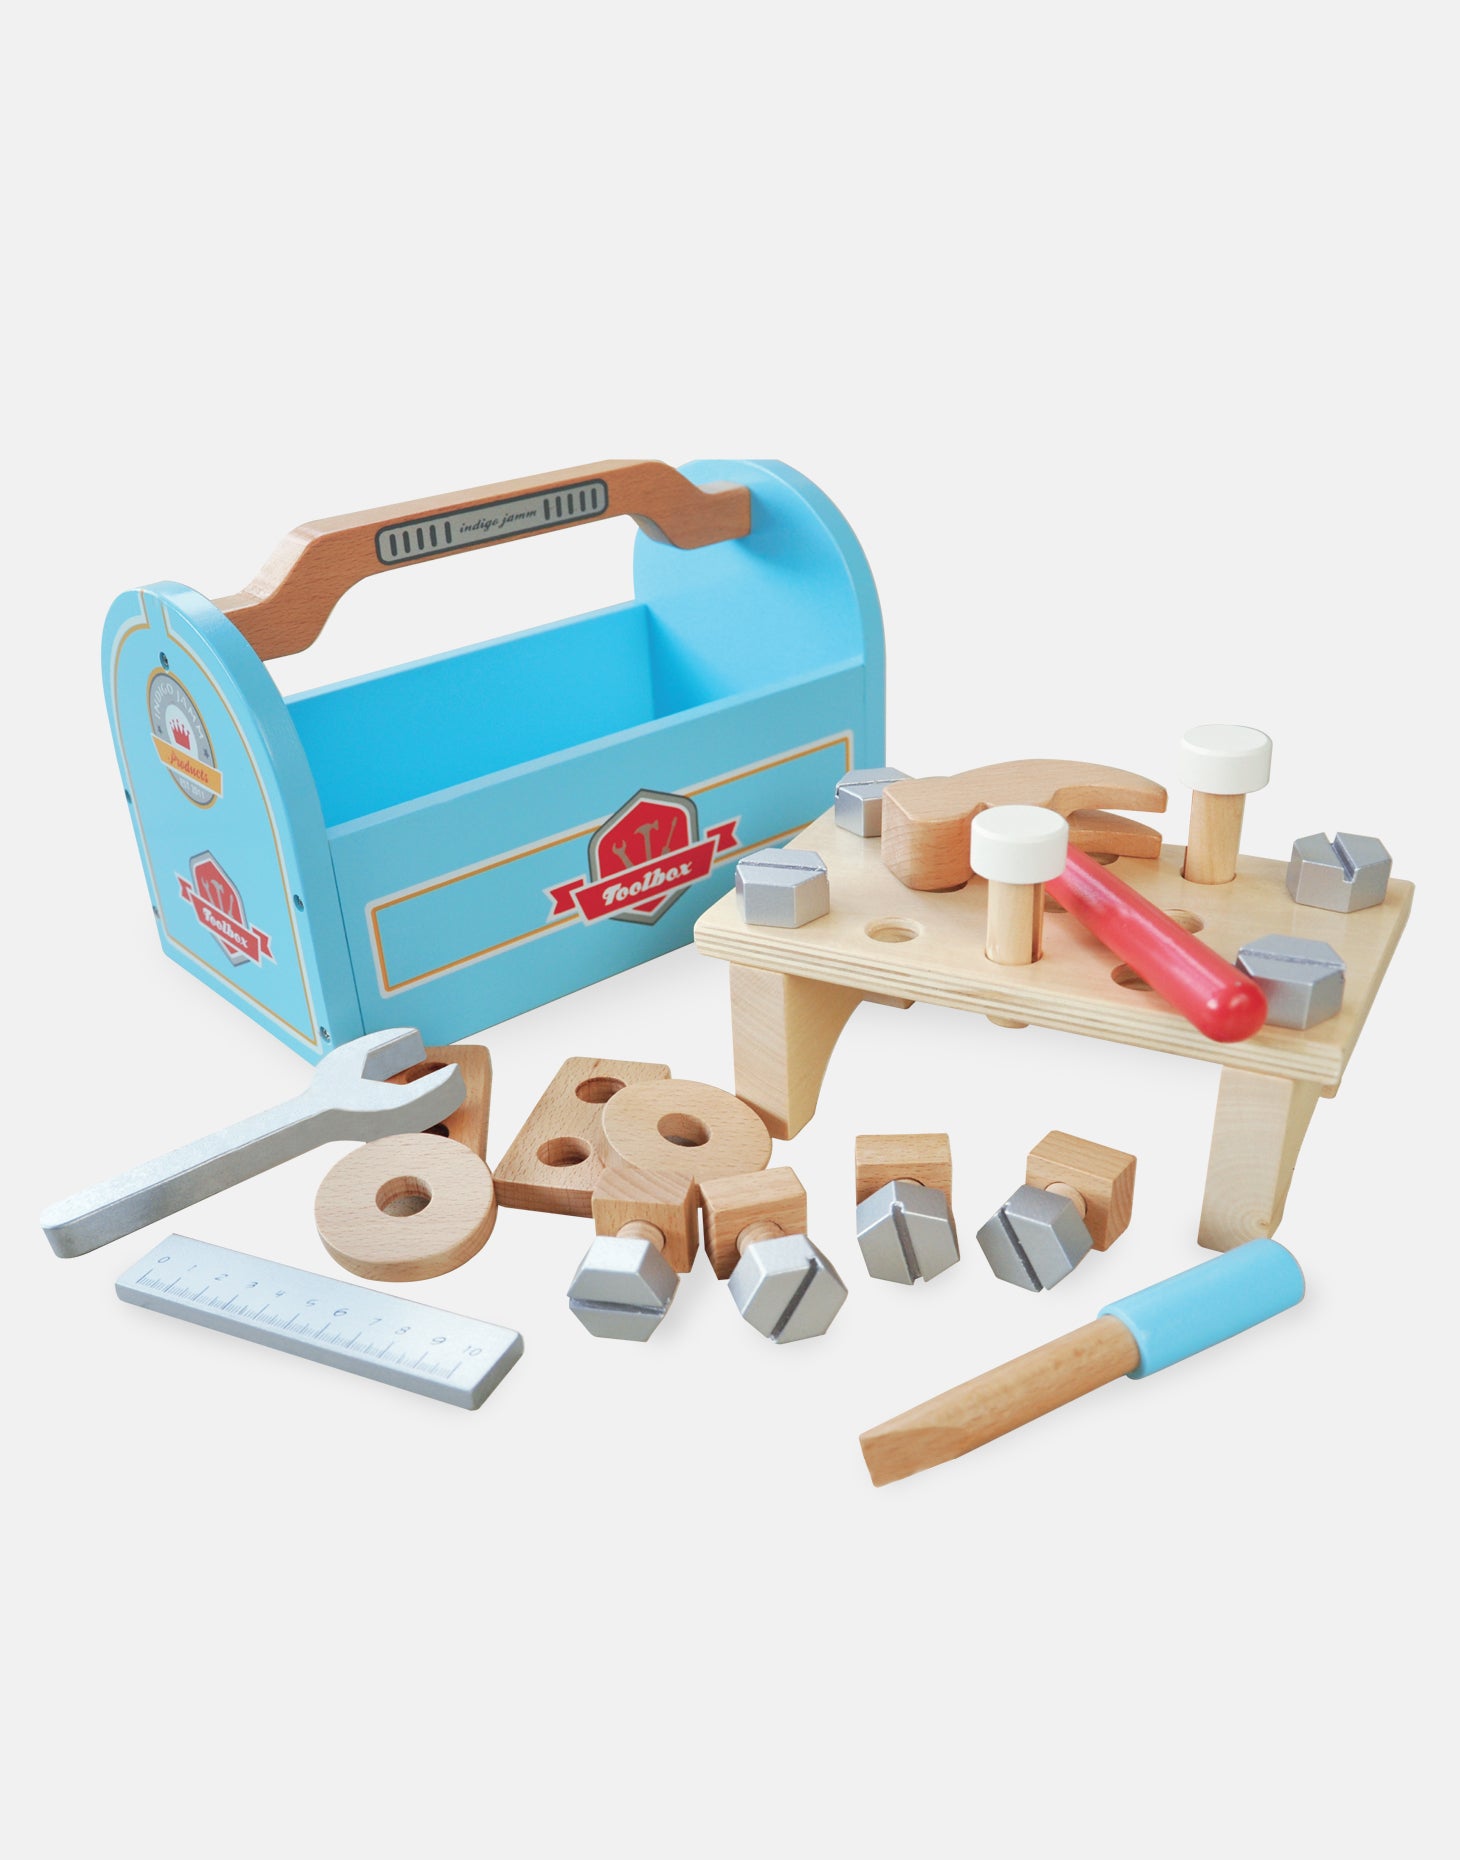 Little Carpenters Wooden Toy Toolbox Imaginative Play - Indigo Jamm